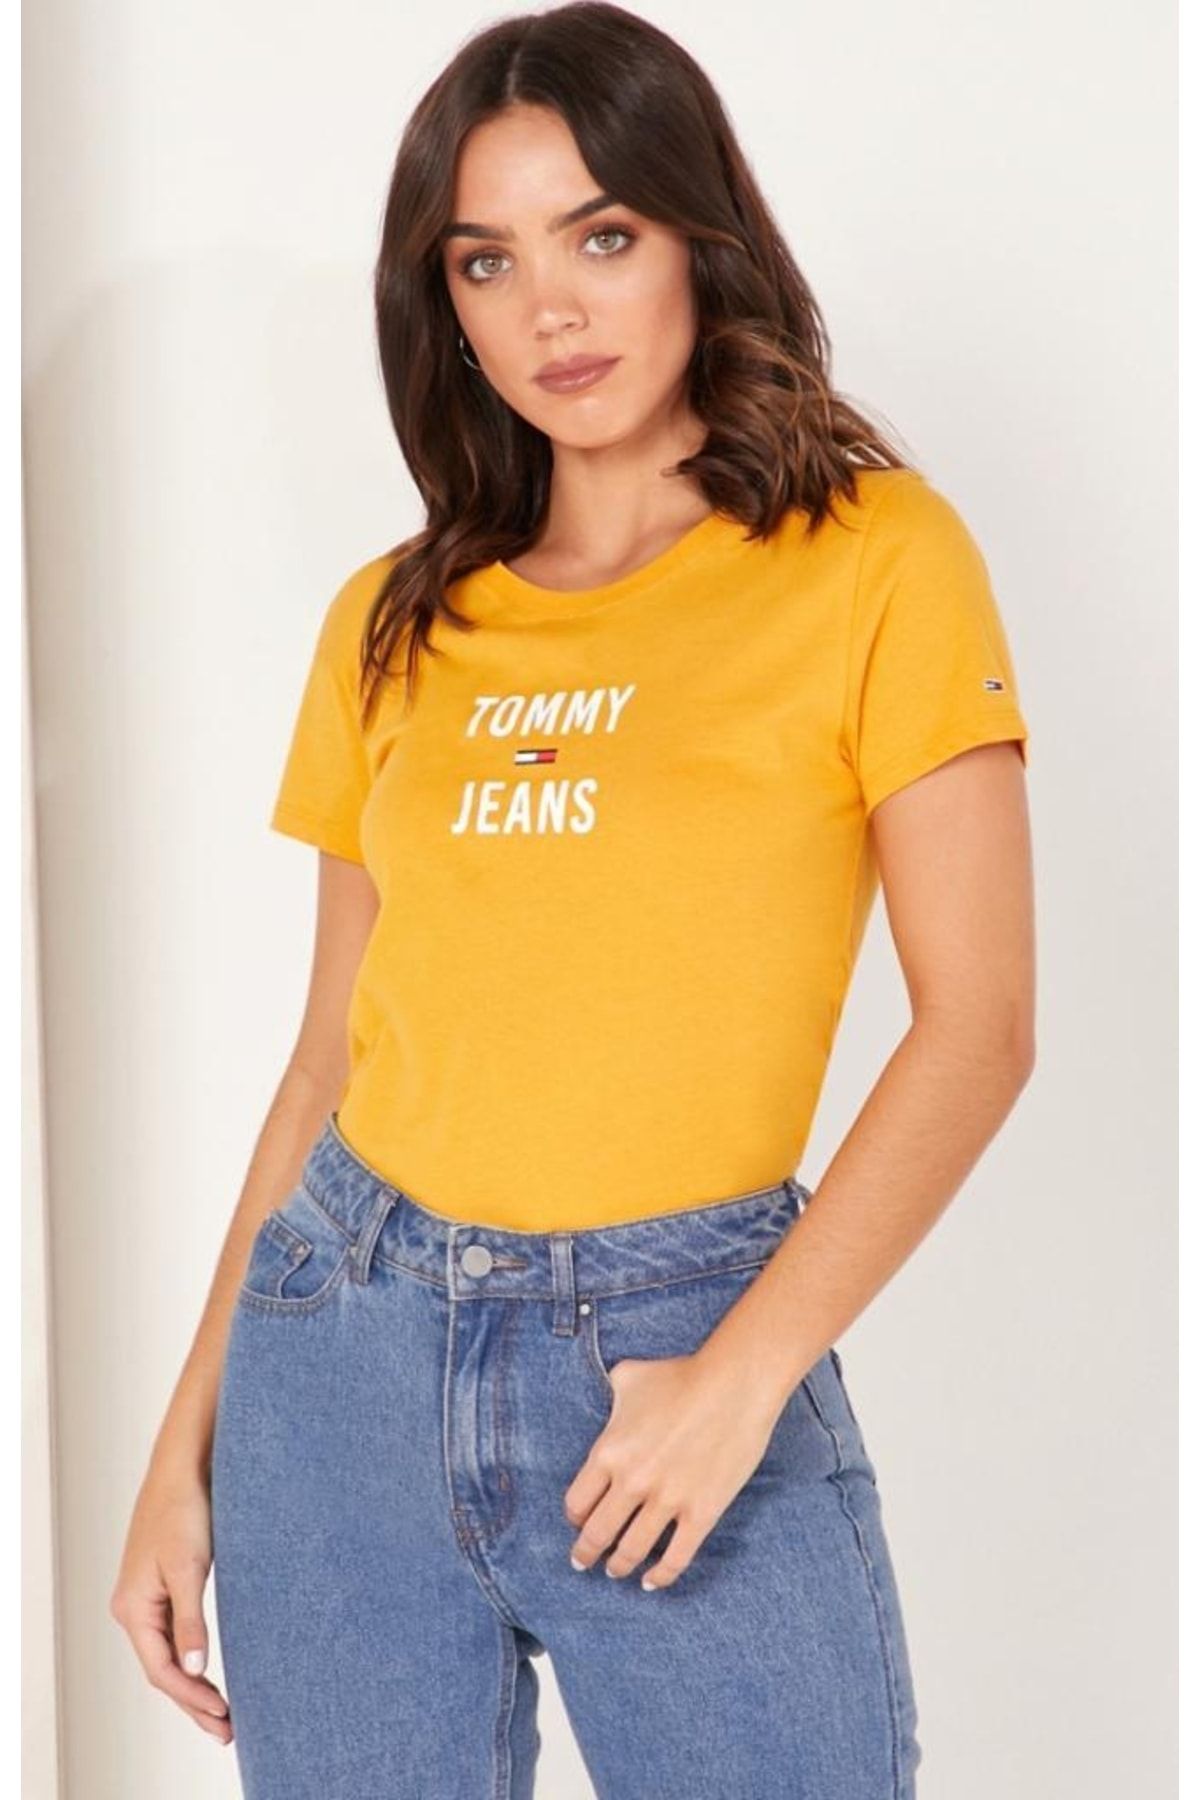 Tommy Hilfiger Women's Square Logo T-shirt